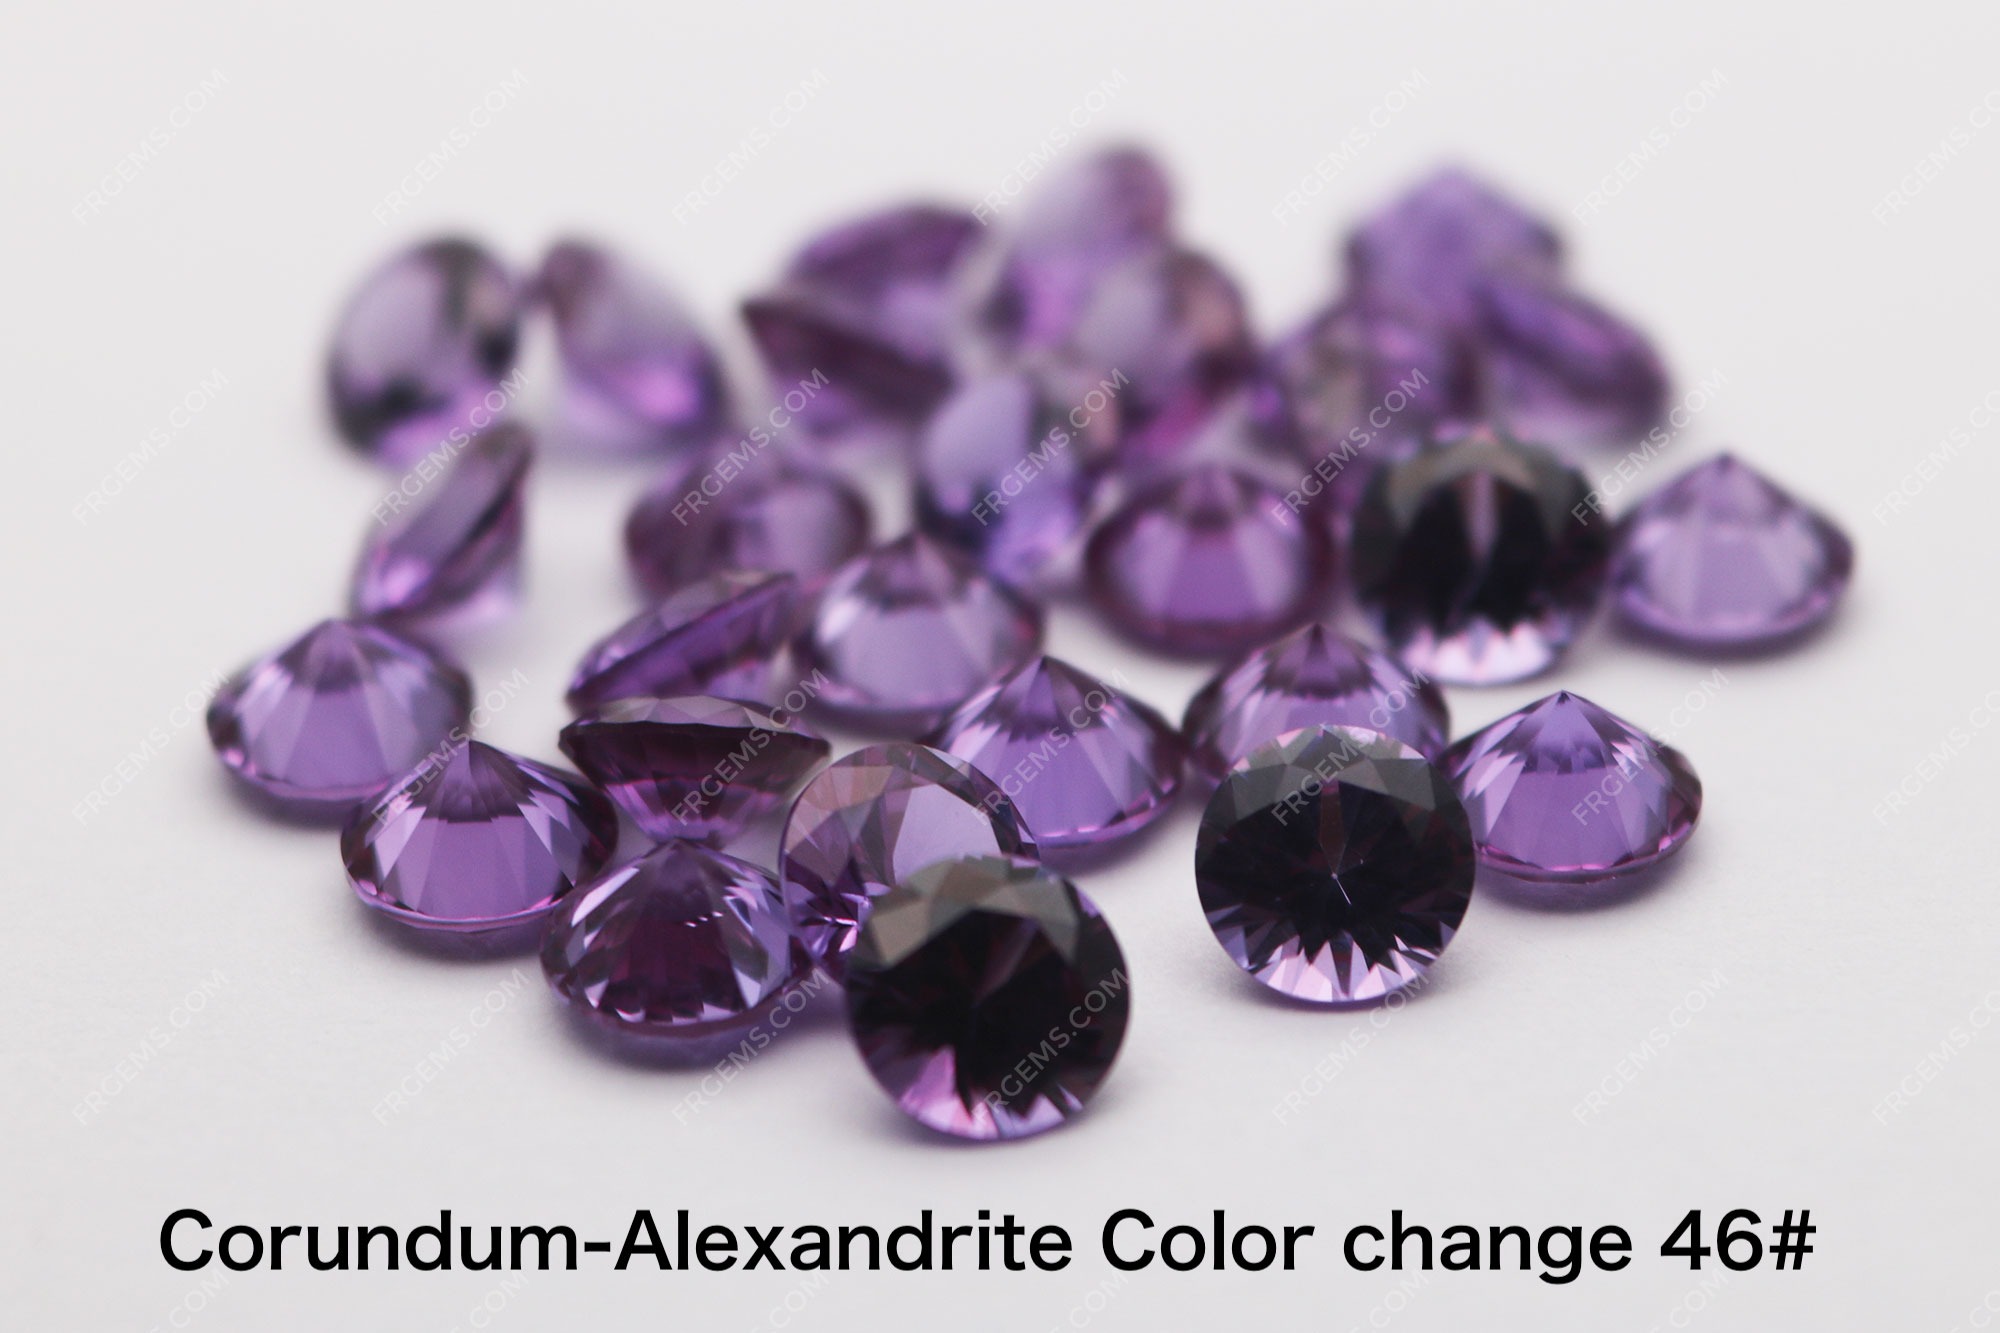 Lab-created-Alexandrite-46#-corundum-gemstones